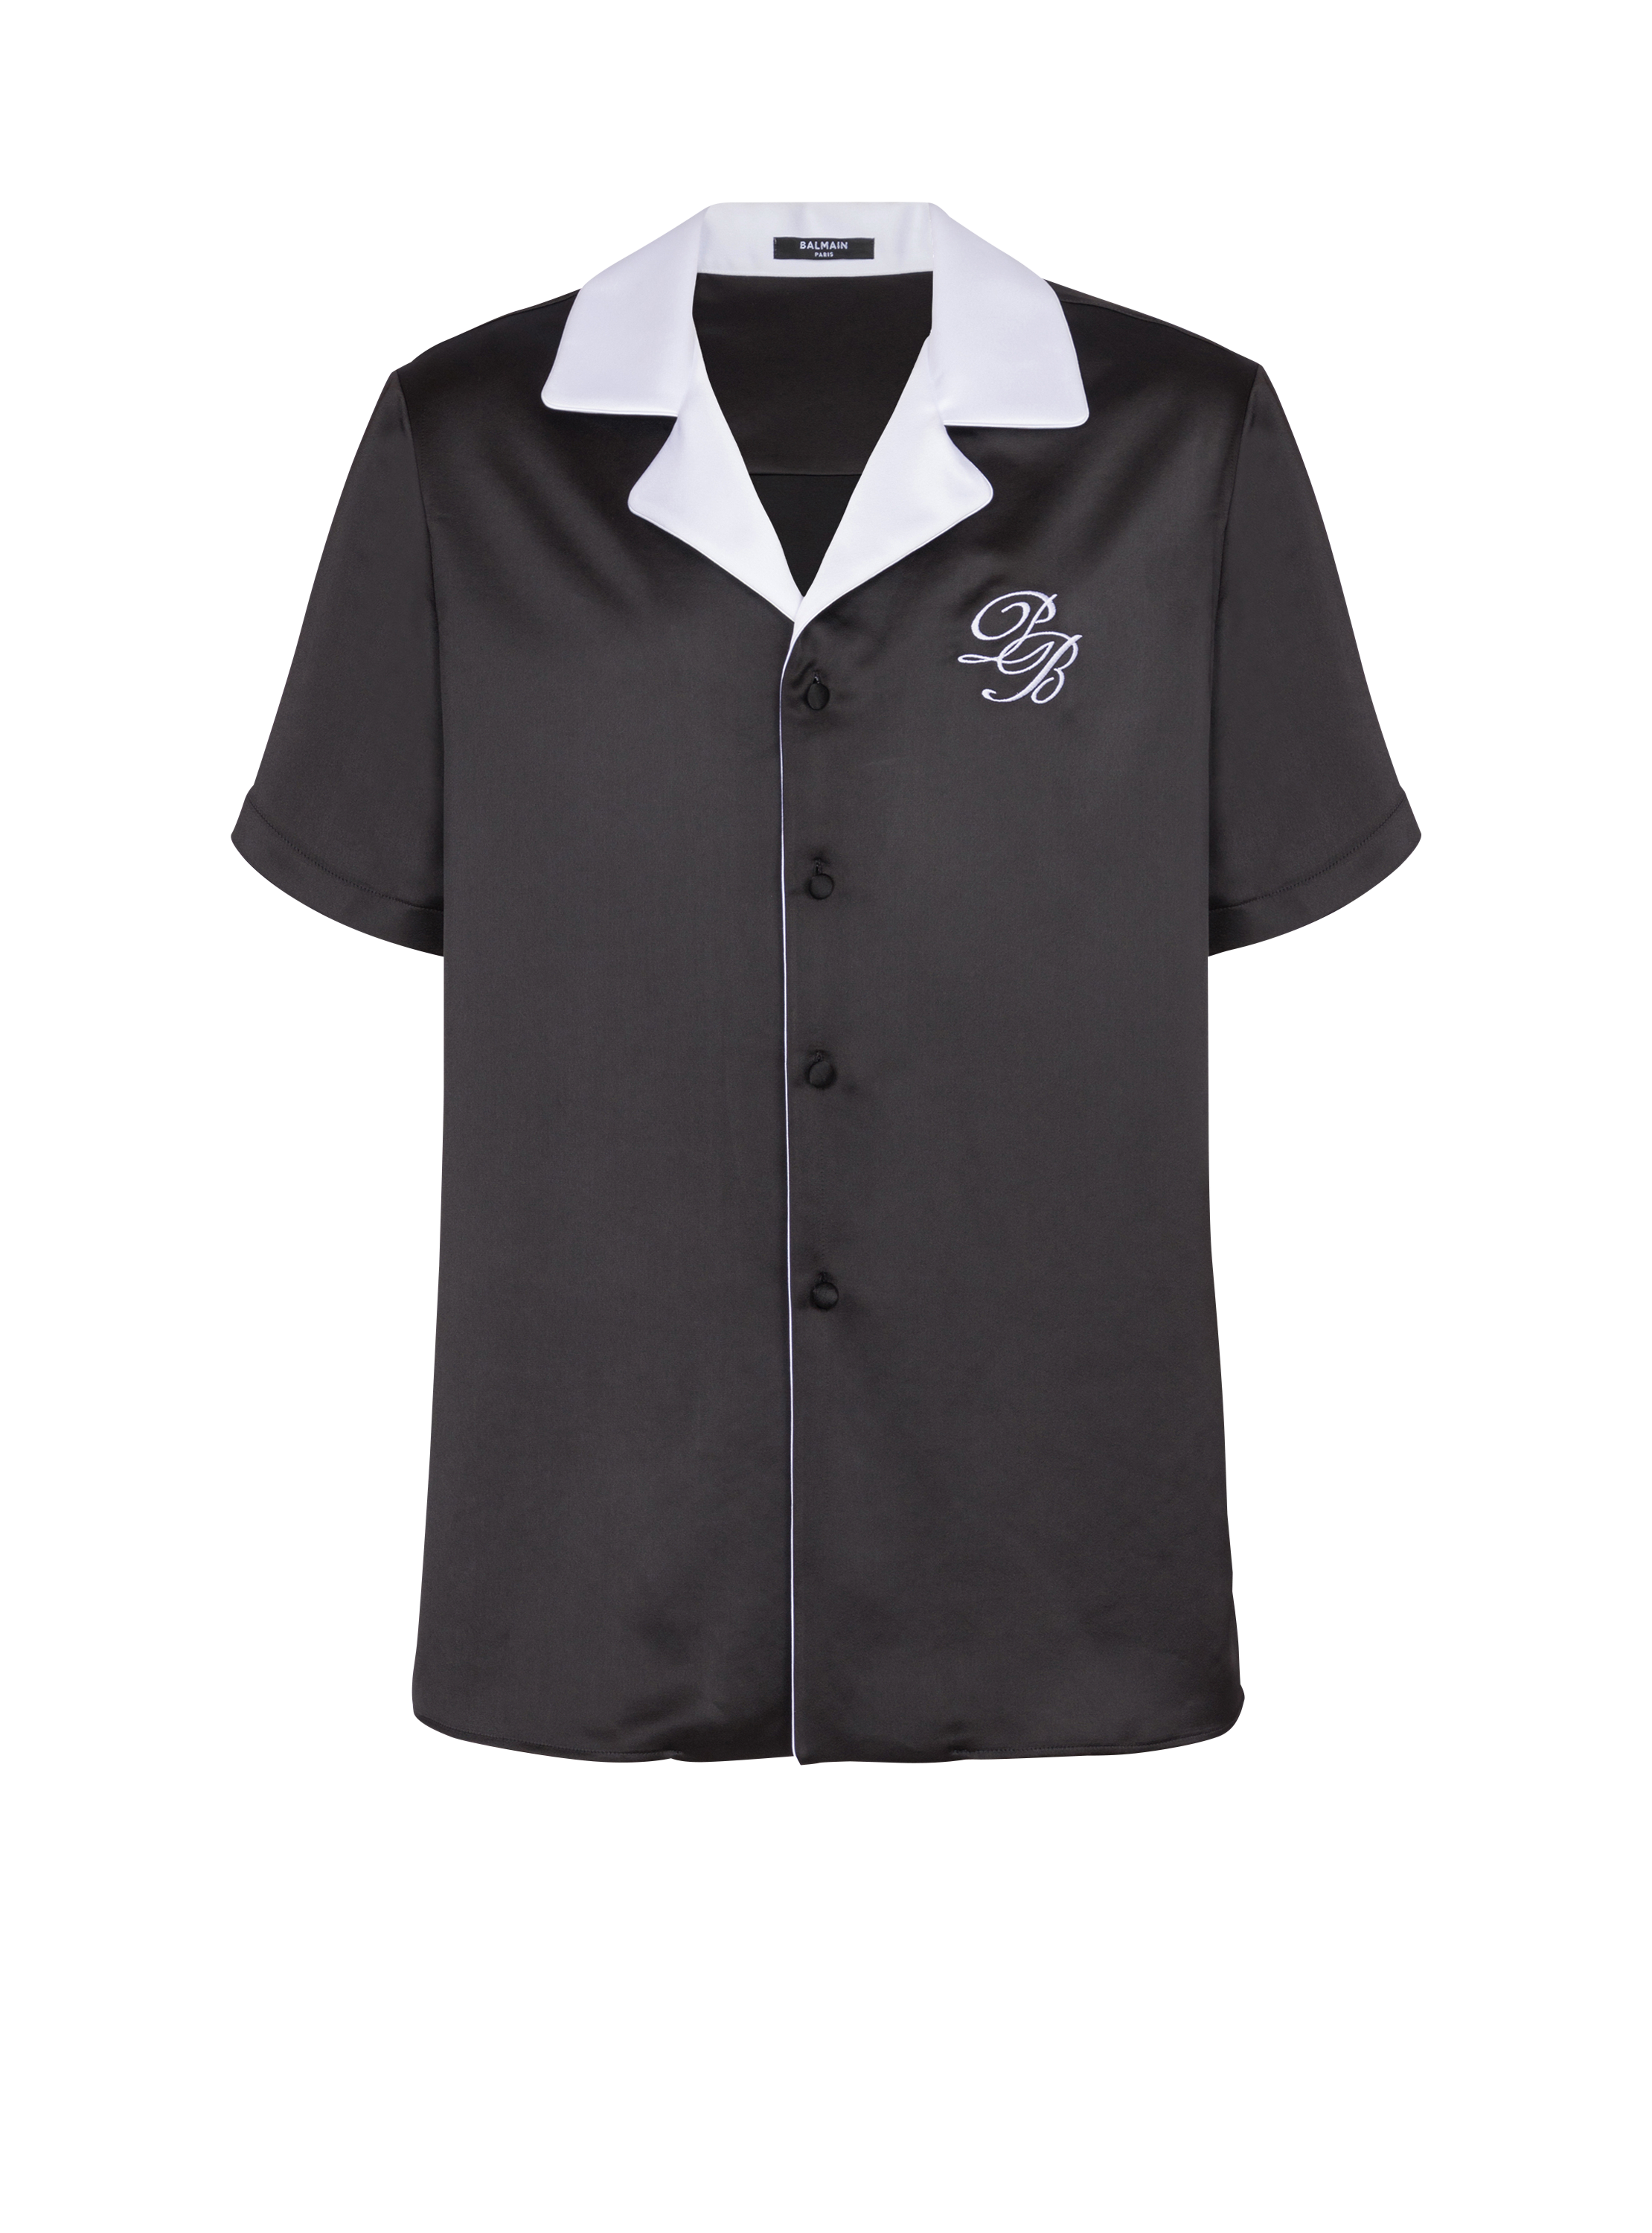 PB Signature satin short-sleeved shirt, black, hi-res